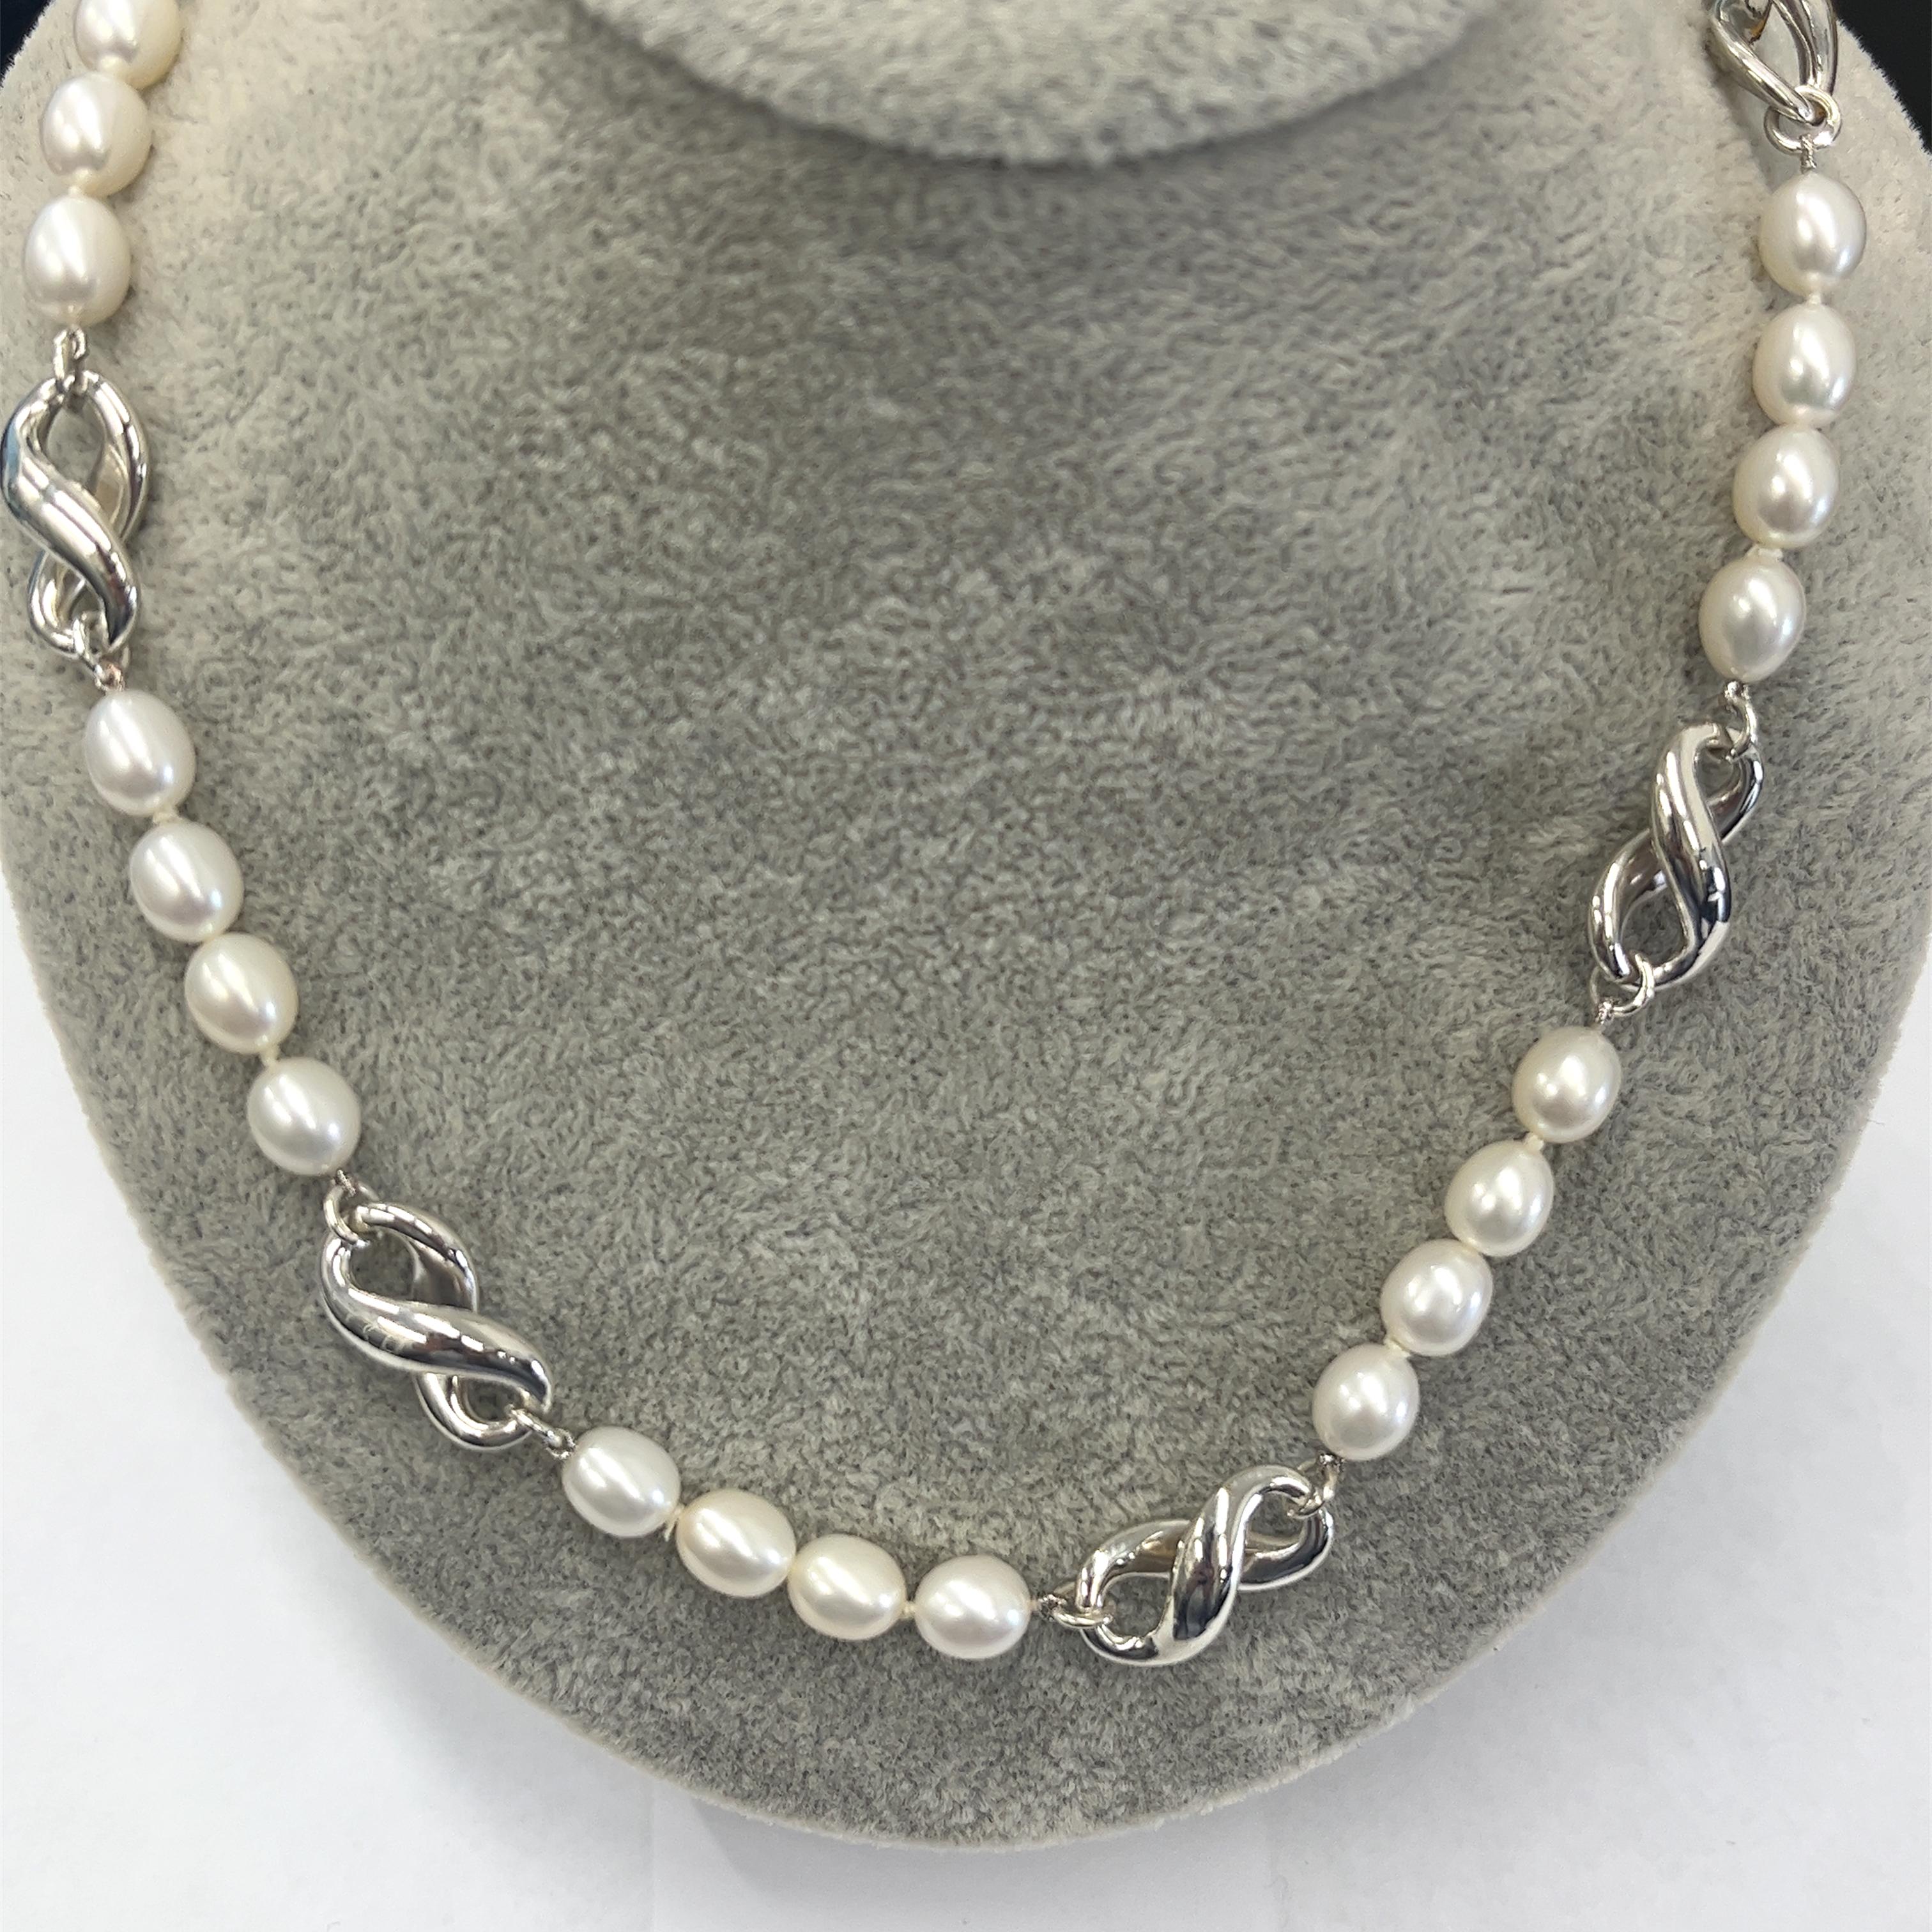 Tiffany & Co. Collier Infinity Figure 8 perles blanches 34.1 g Excellent état à London, GB